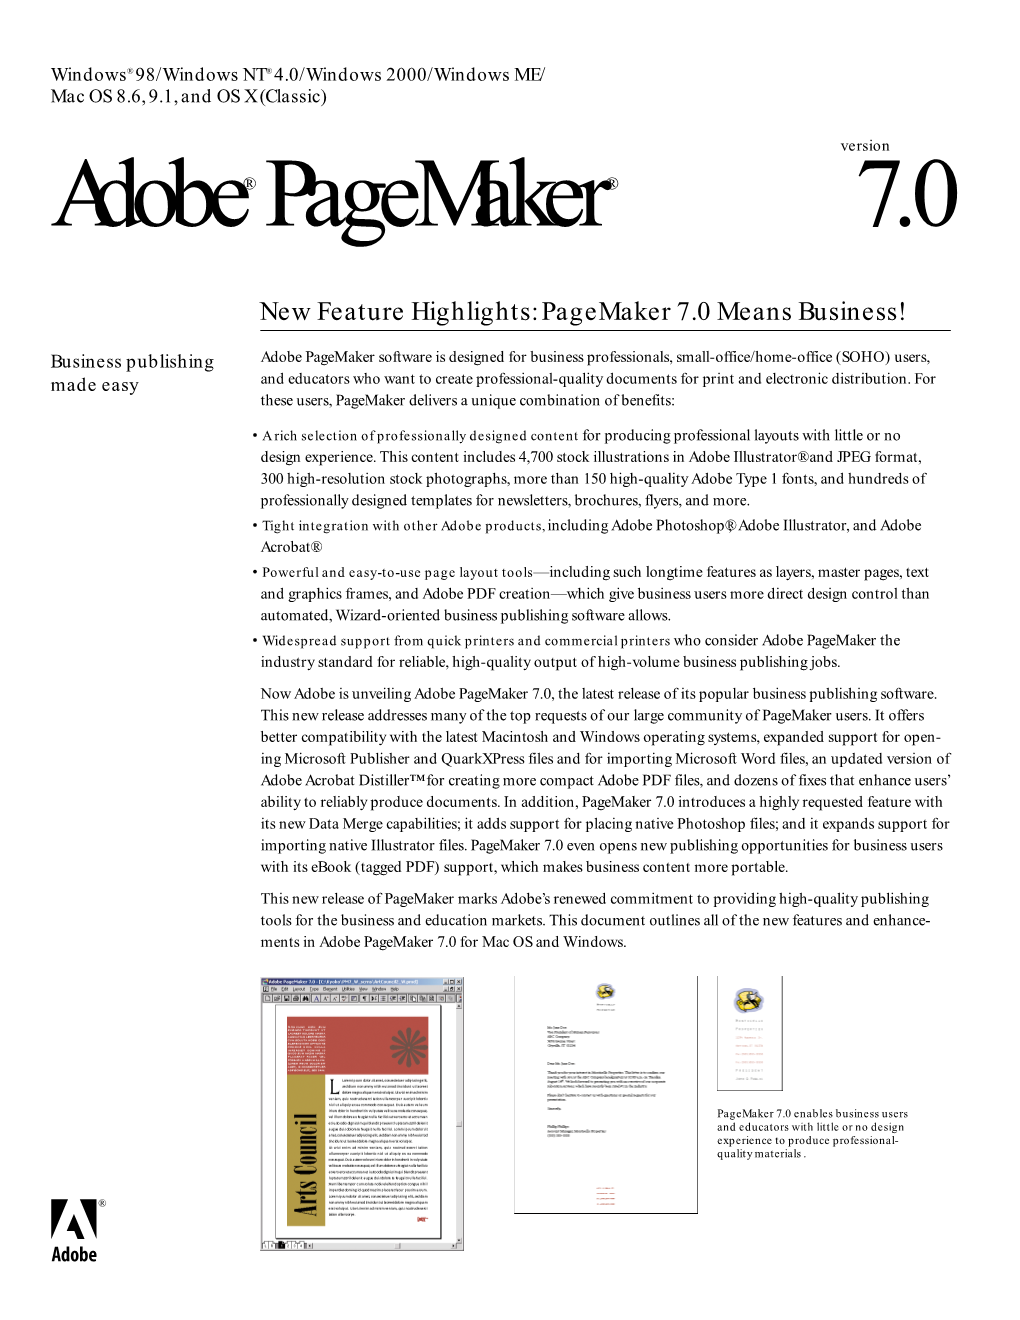 Adobe Pagemaker 7.0 New Feature Highlights